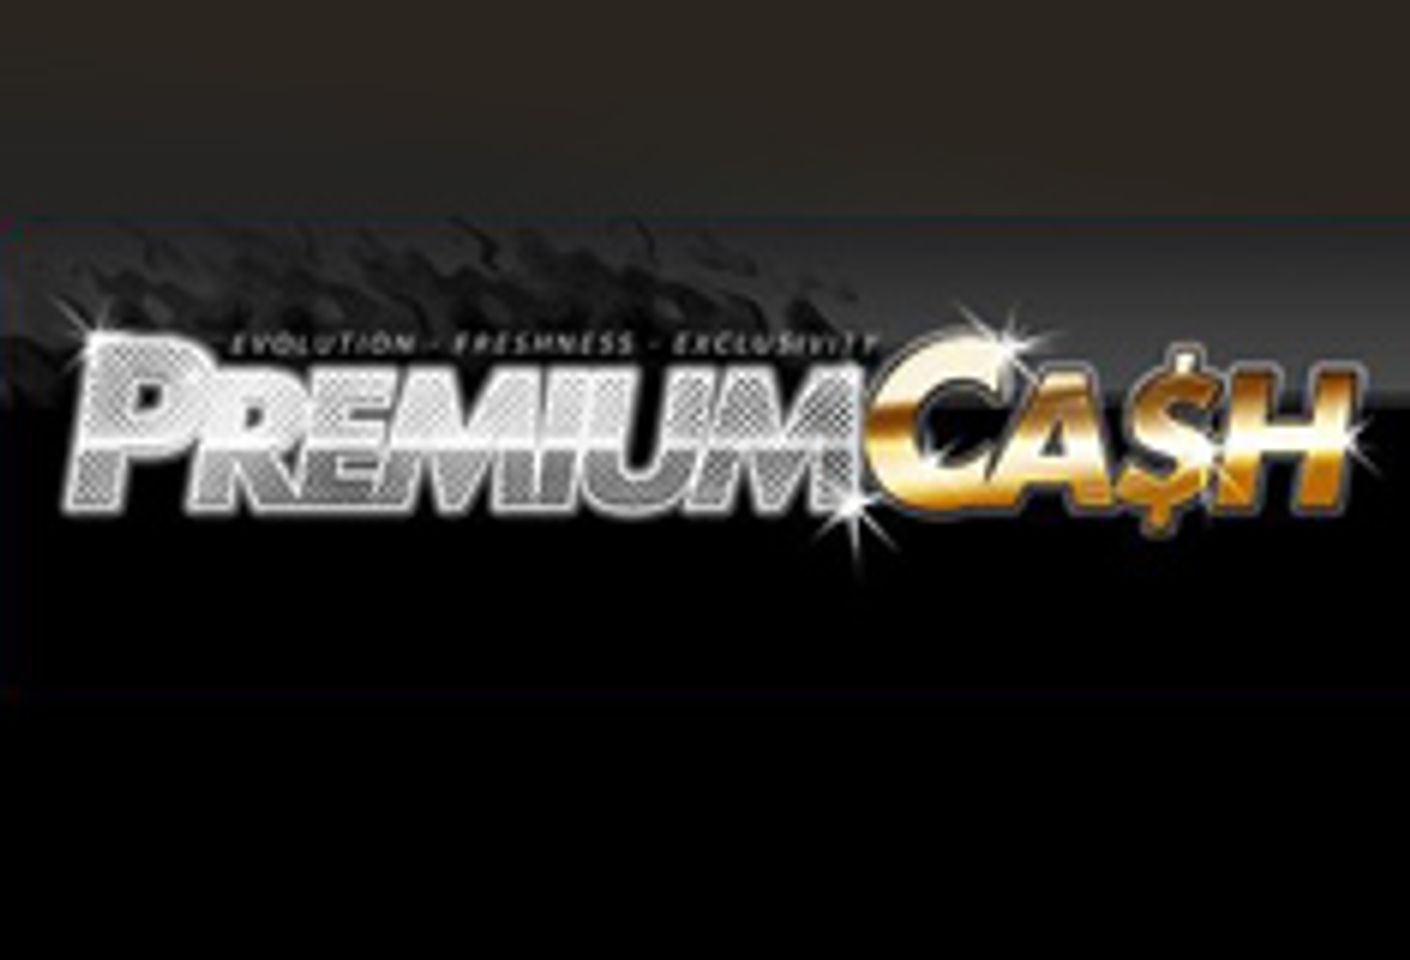 PremiumCash.com Receives 5 AVN Award Nominations